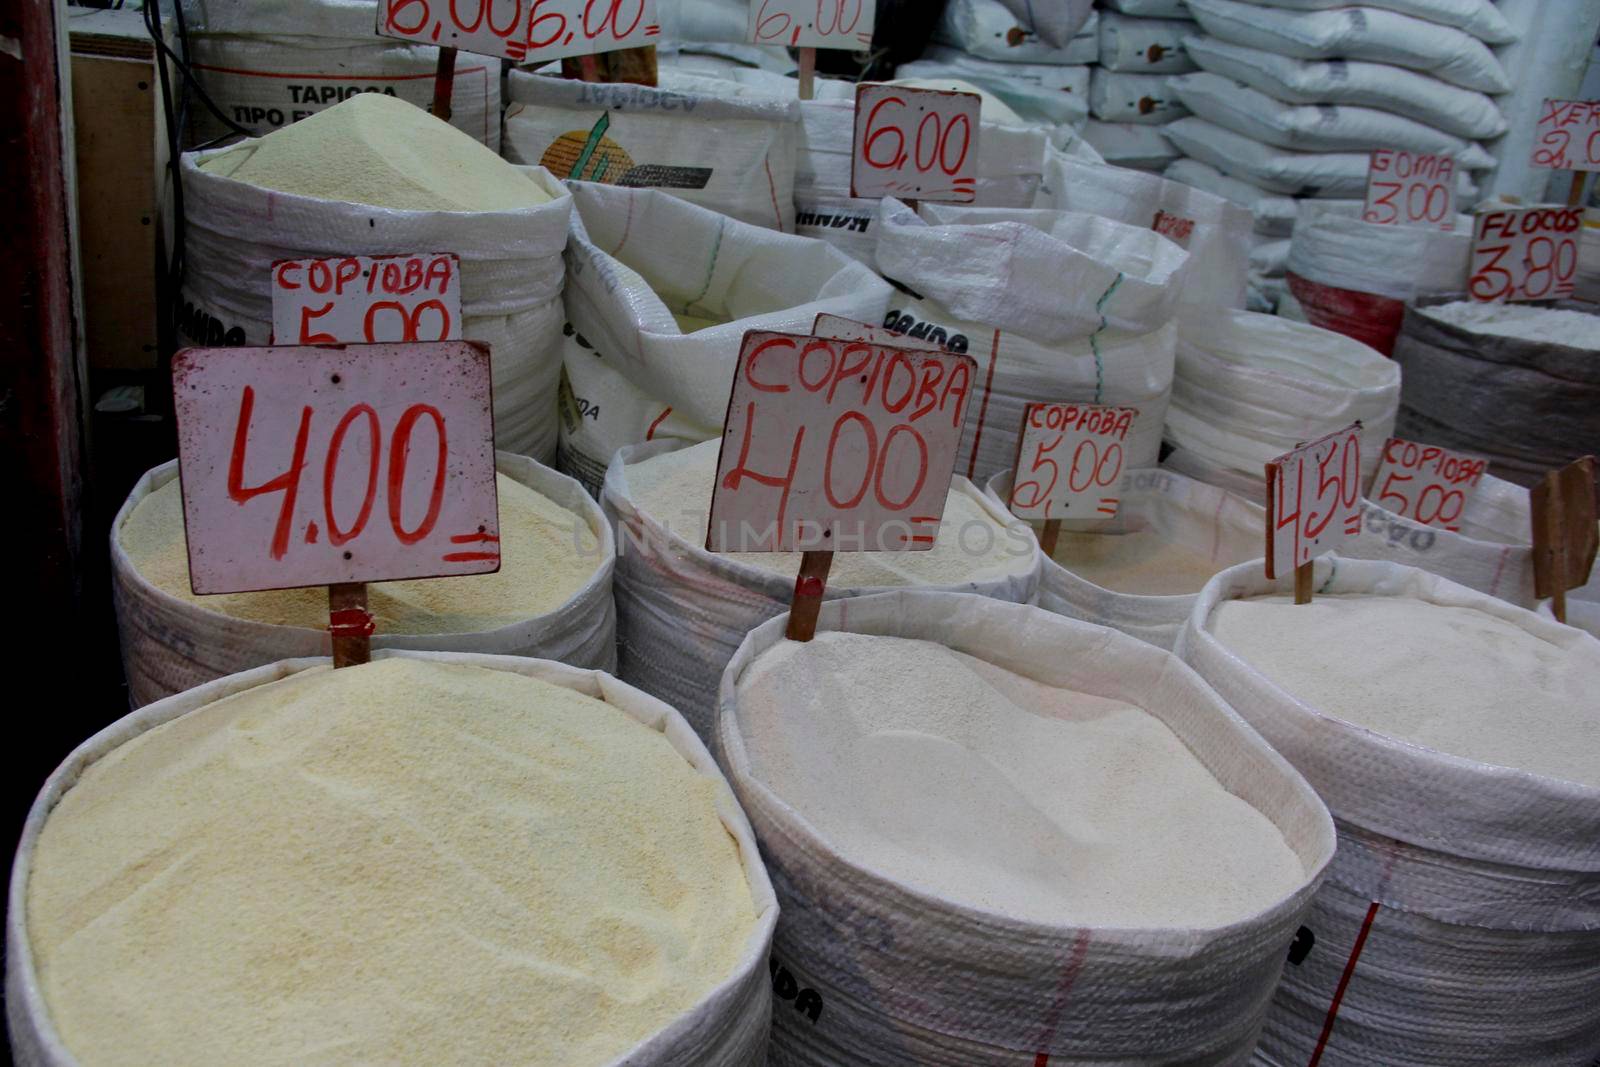 salvador, bahia / brazil - april 21, 2013: manioc flour for sale at the Sao Joaquim fair in the city of Salvador.